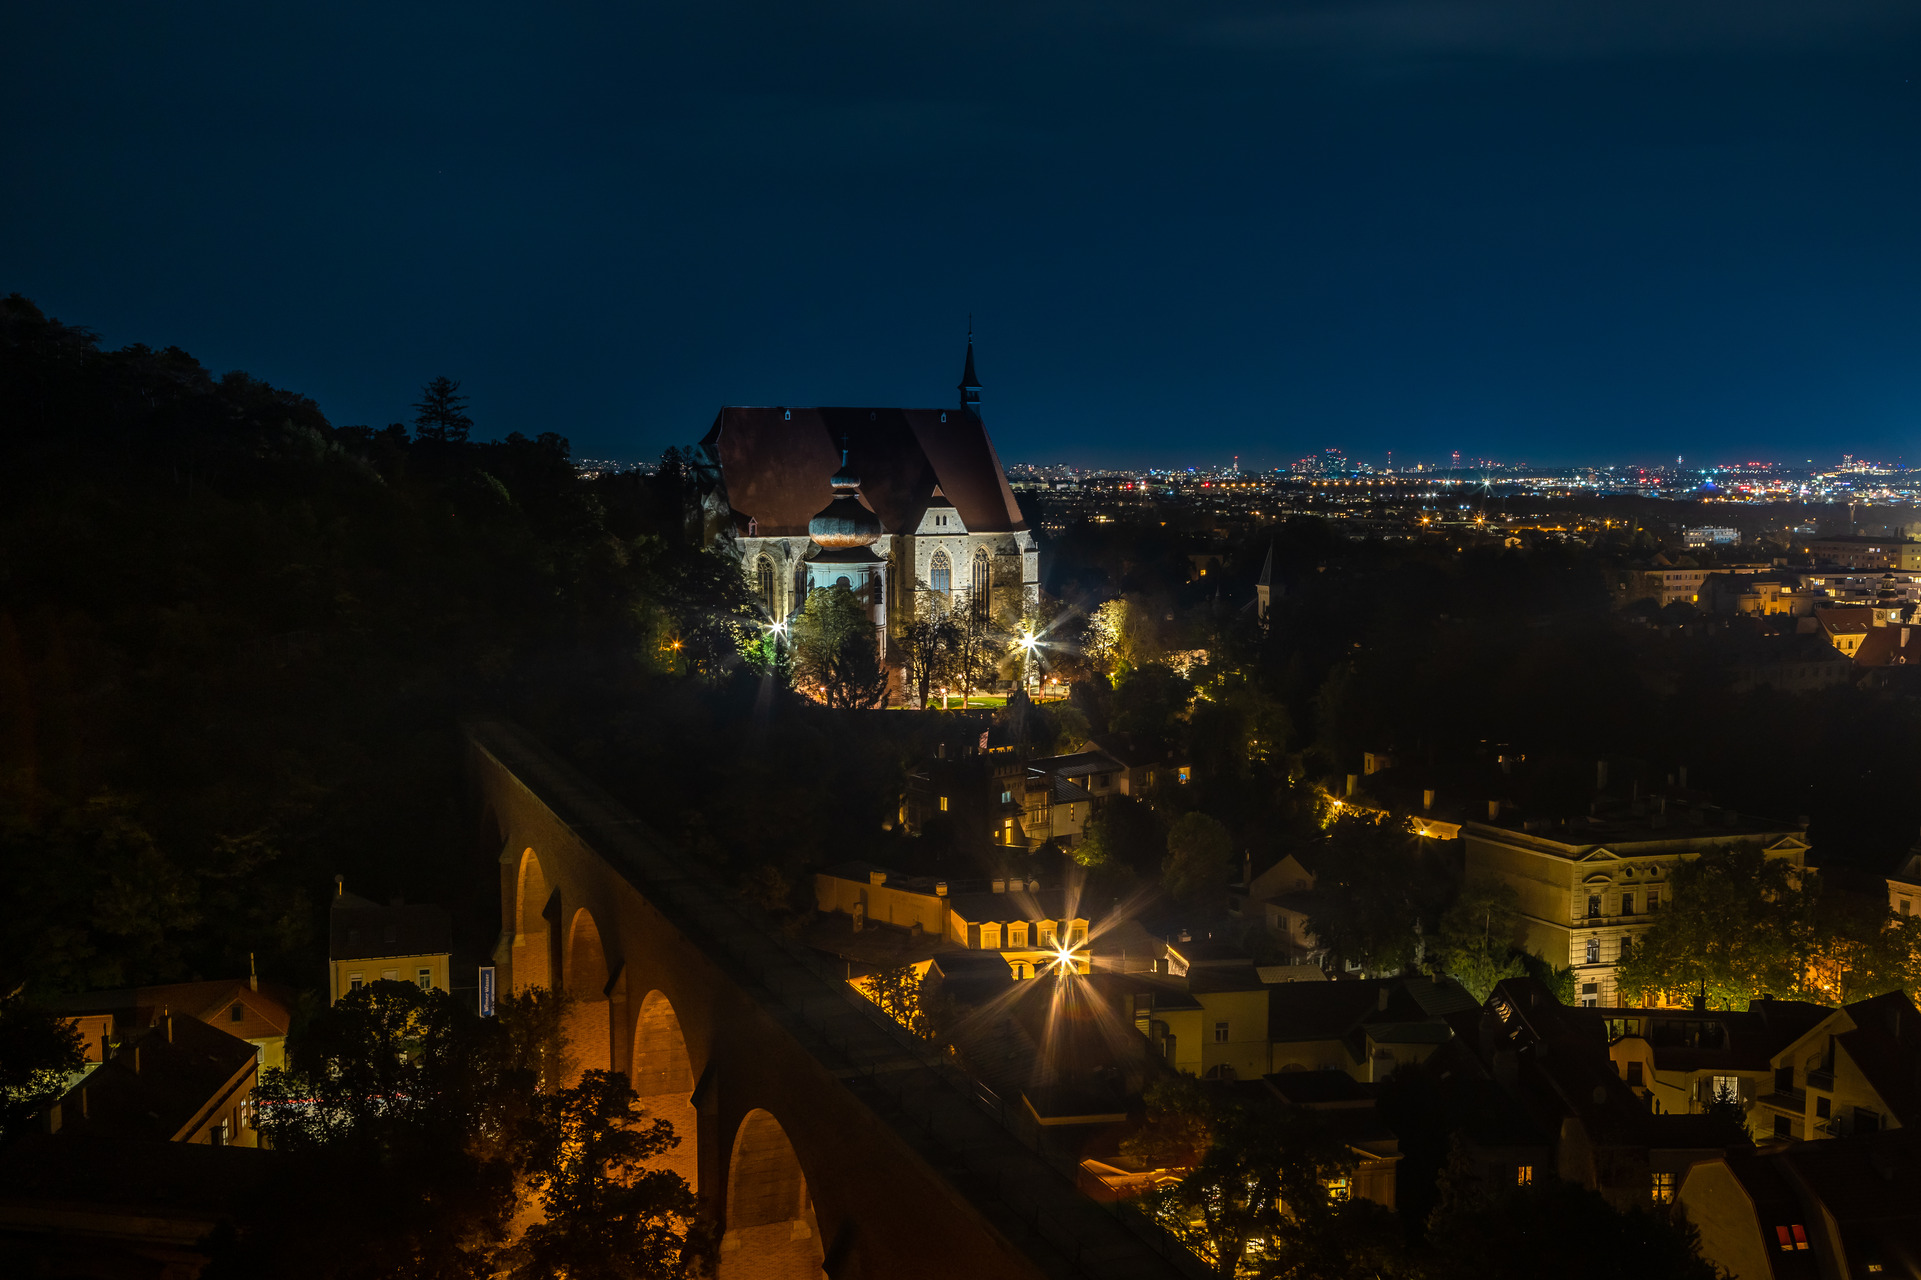 #night #cathedral #landscape #cityscape #city #aquaduct #lights, Yuri Merkulov